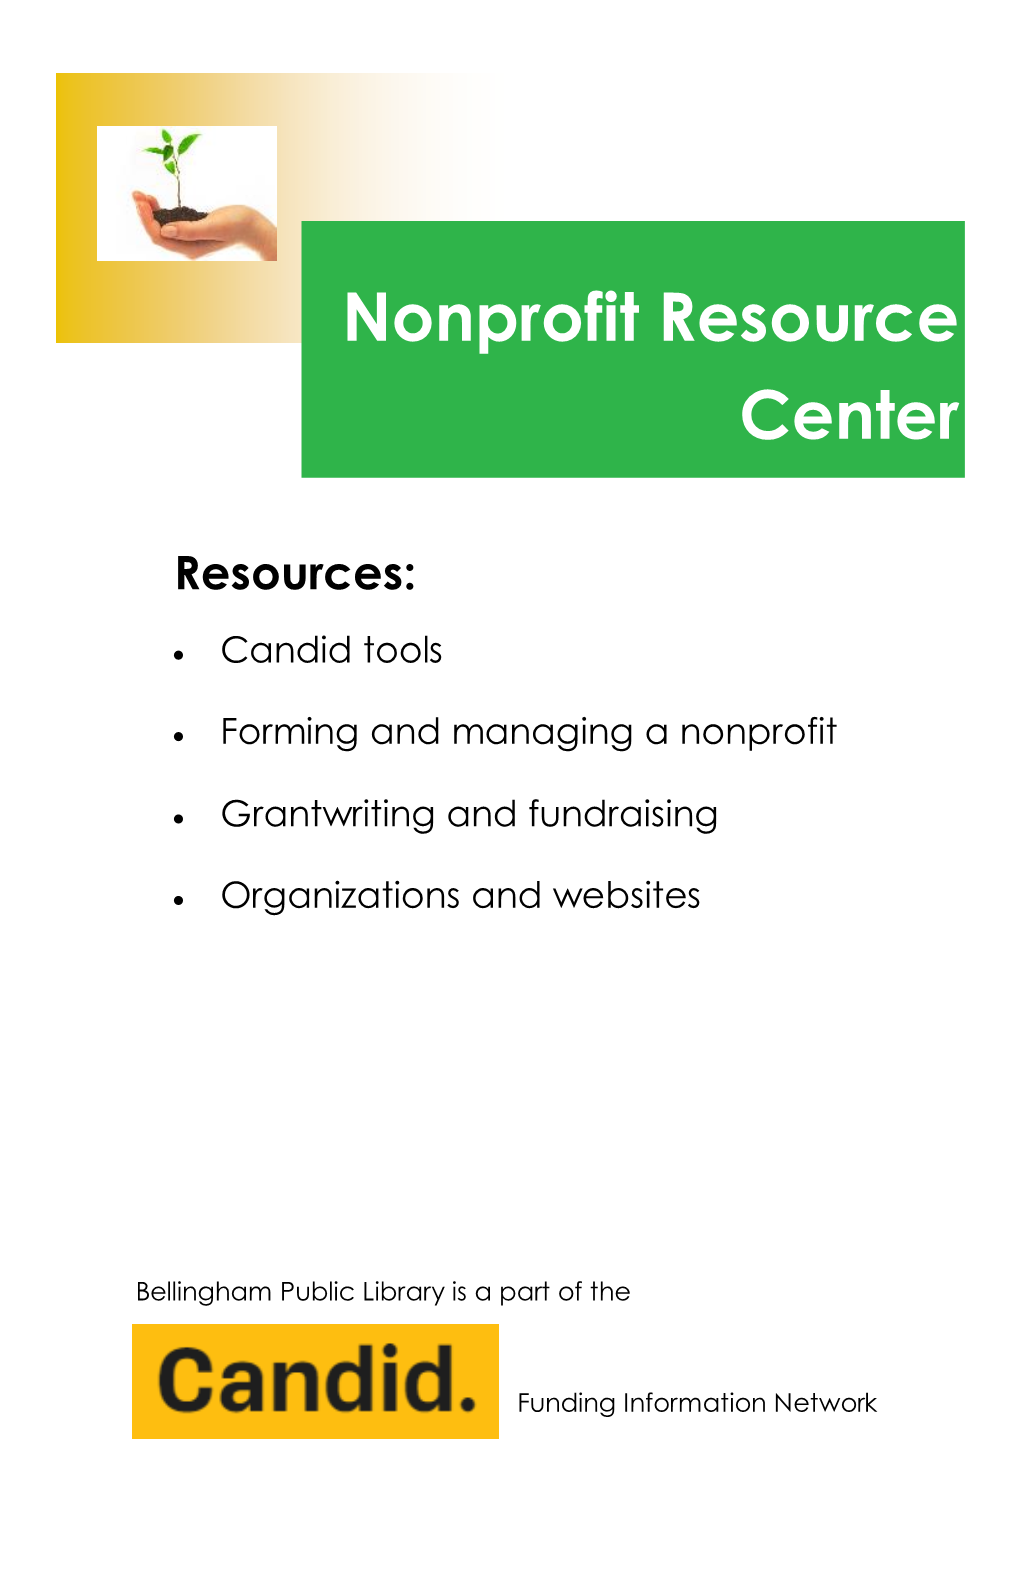 Nonprofit Resource Center Brochure